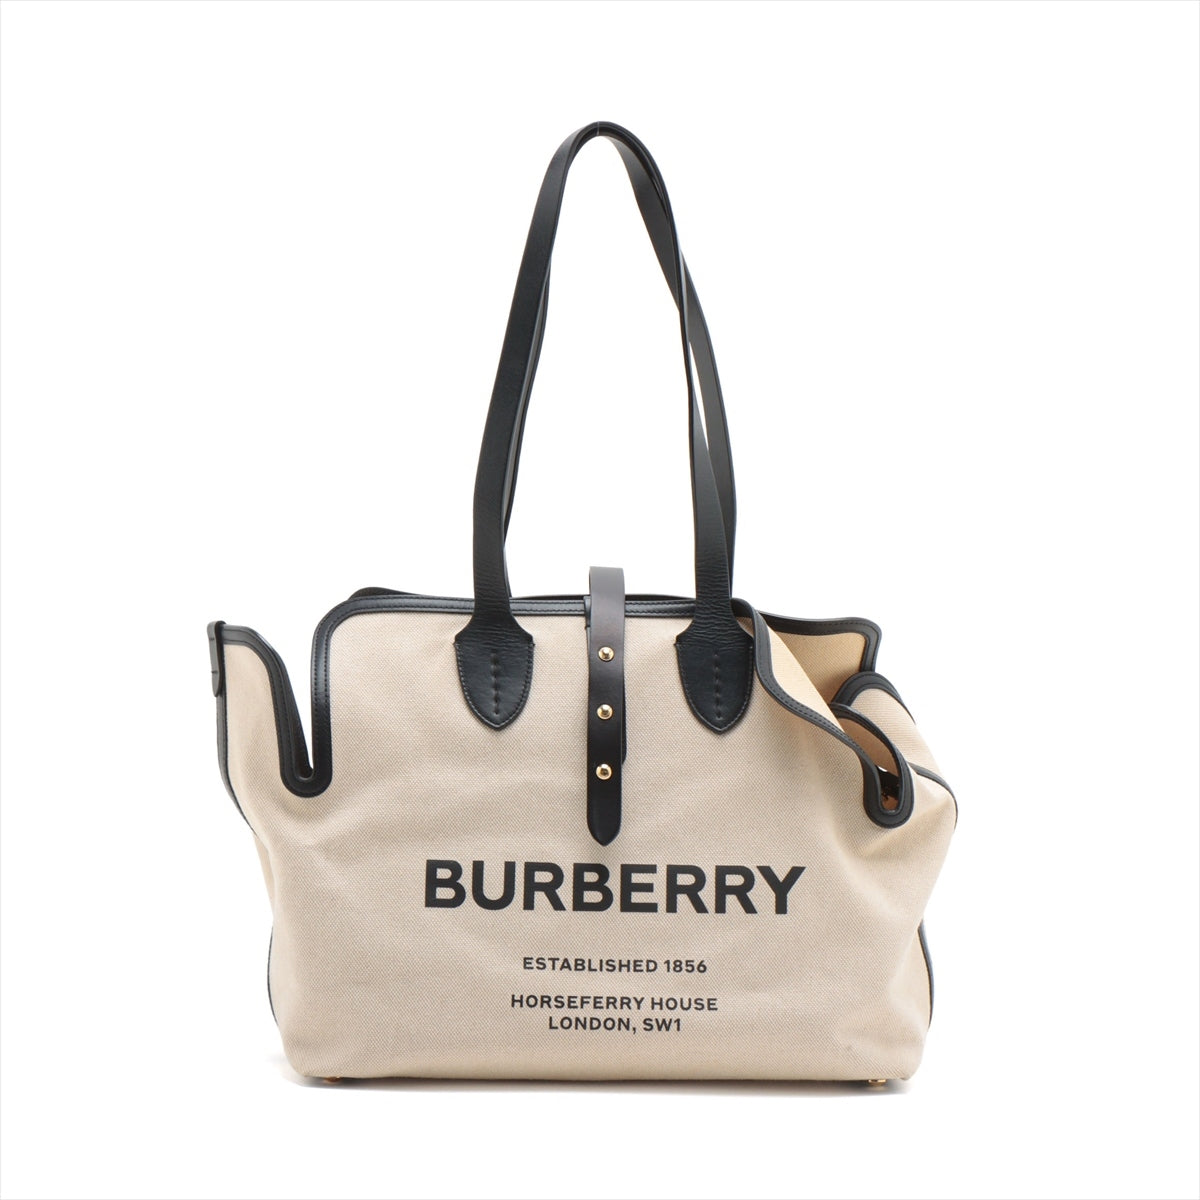 Burberry Logo Canvas & leather Tote bag black x beige